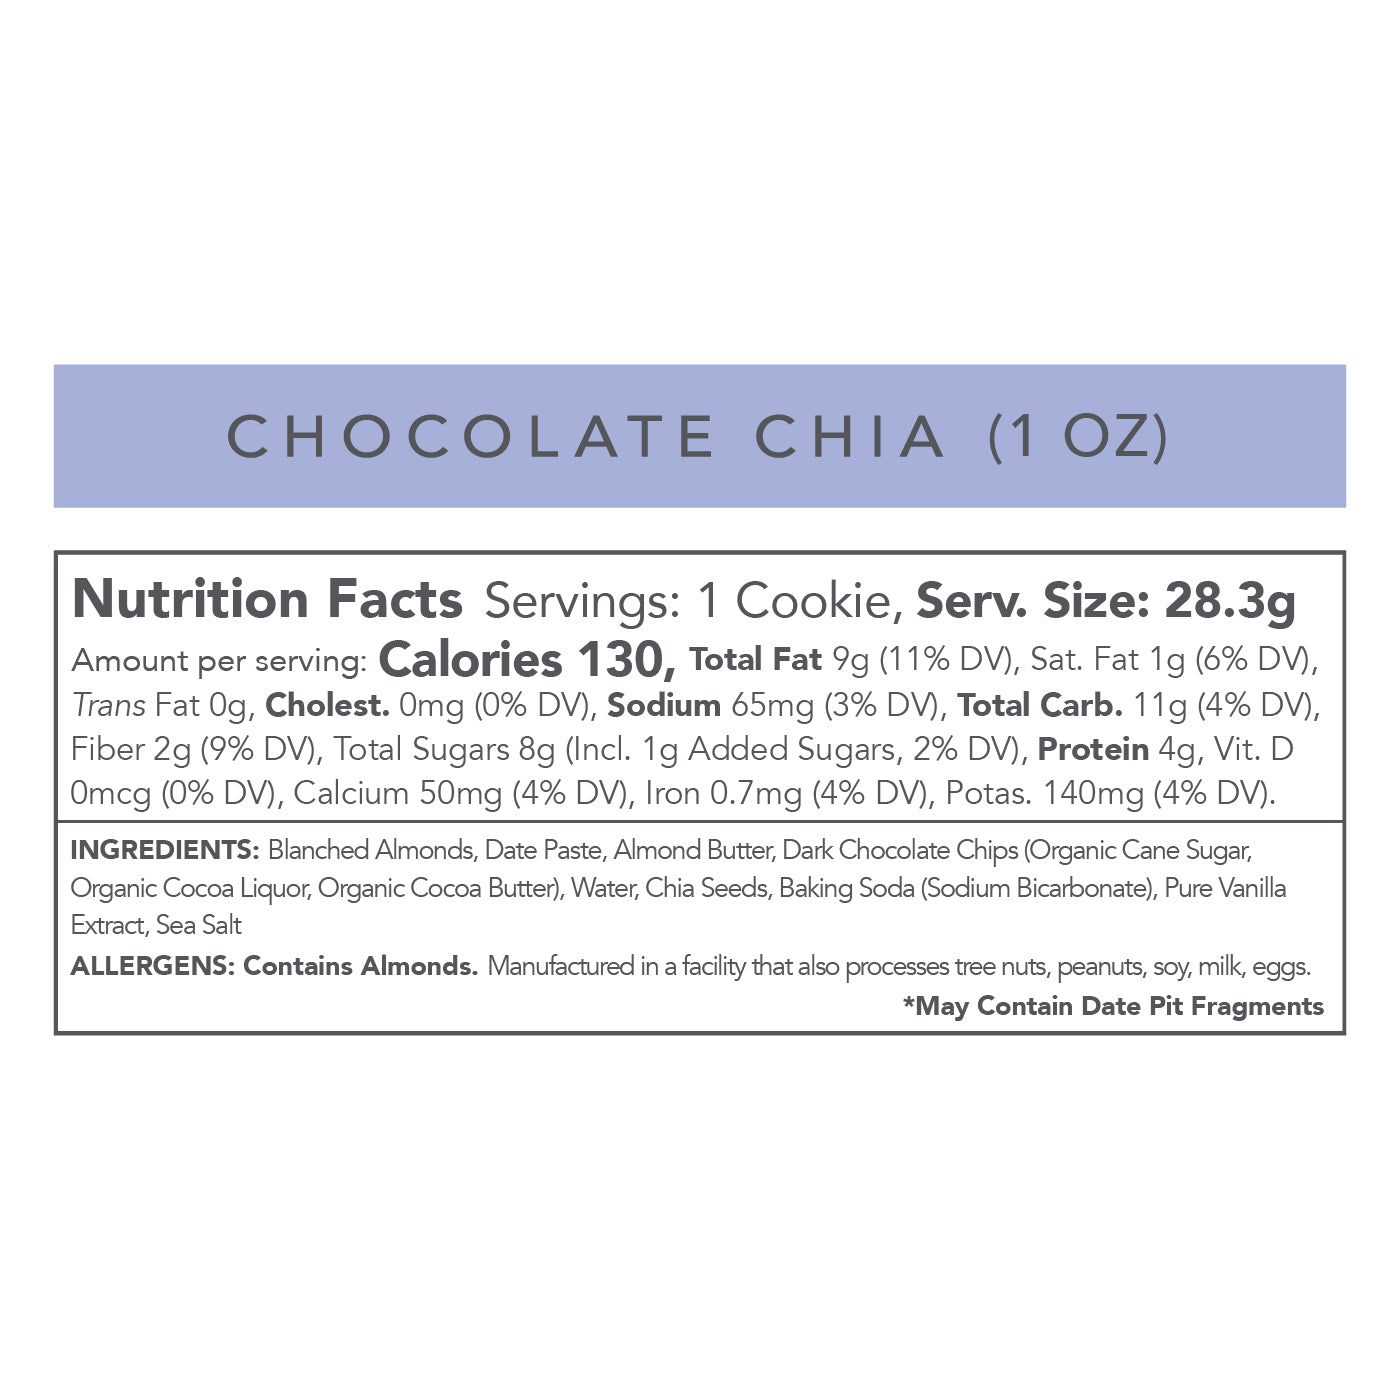 CHOCOLATE CHIA - 1 OZ - BOX OF 24